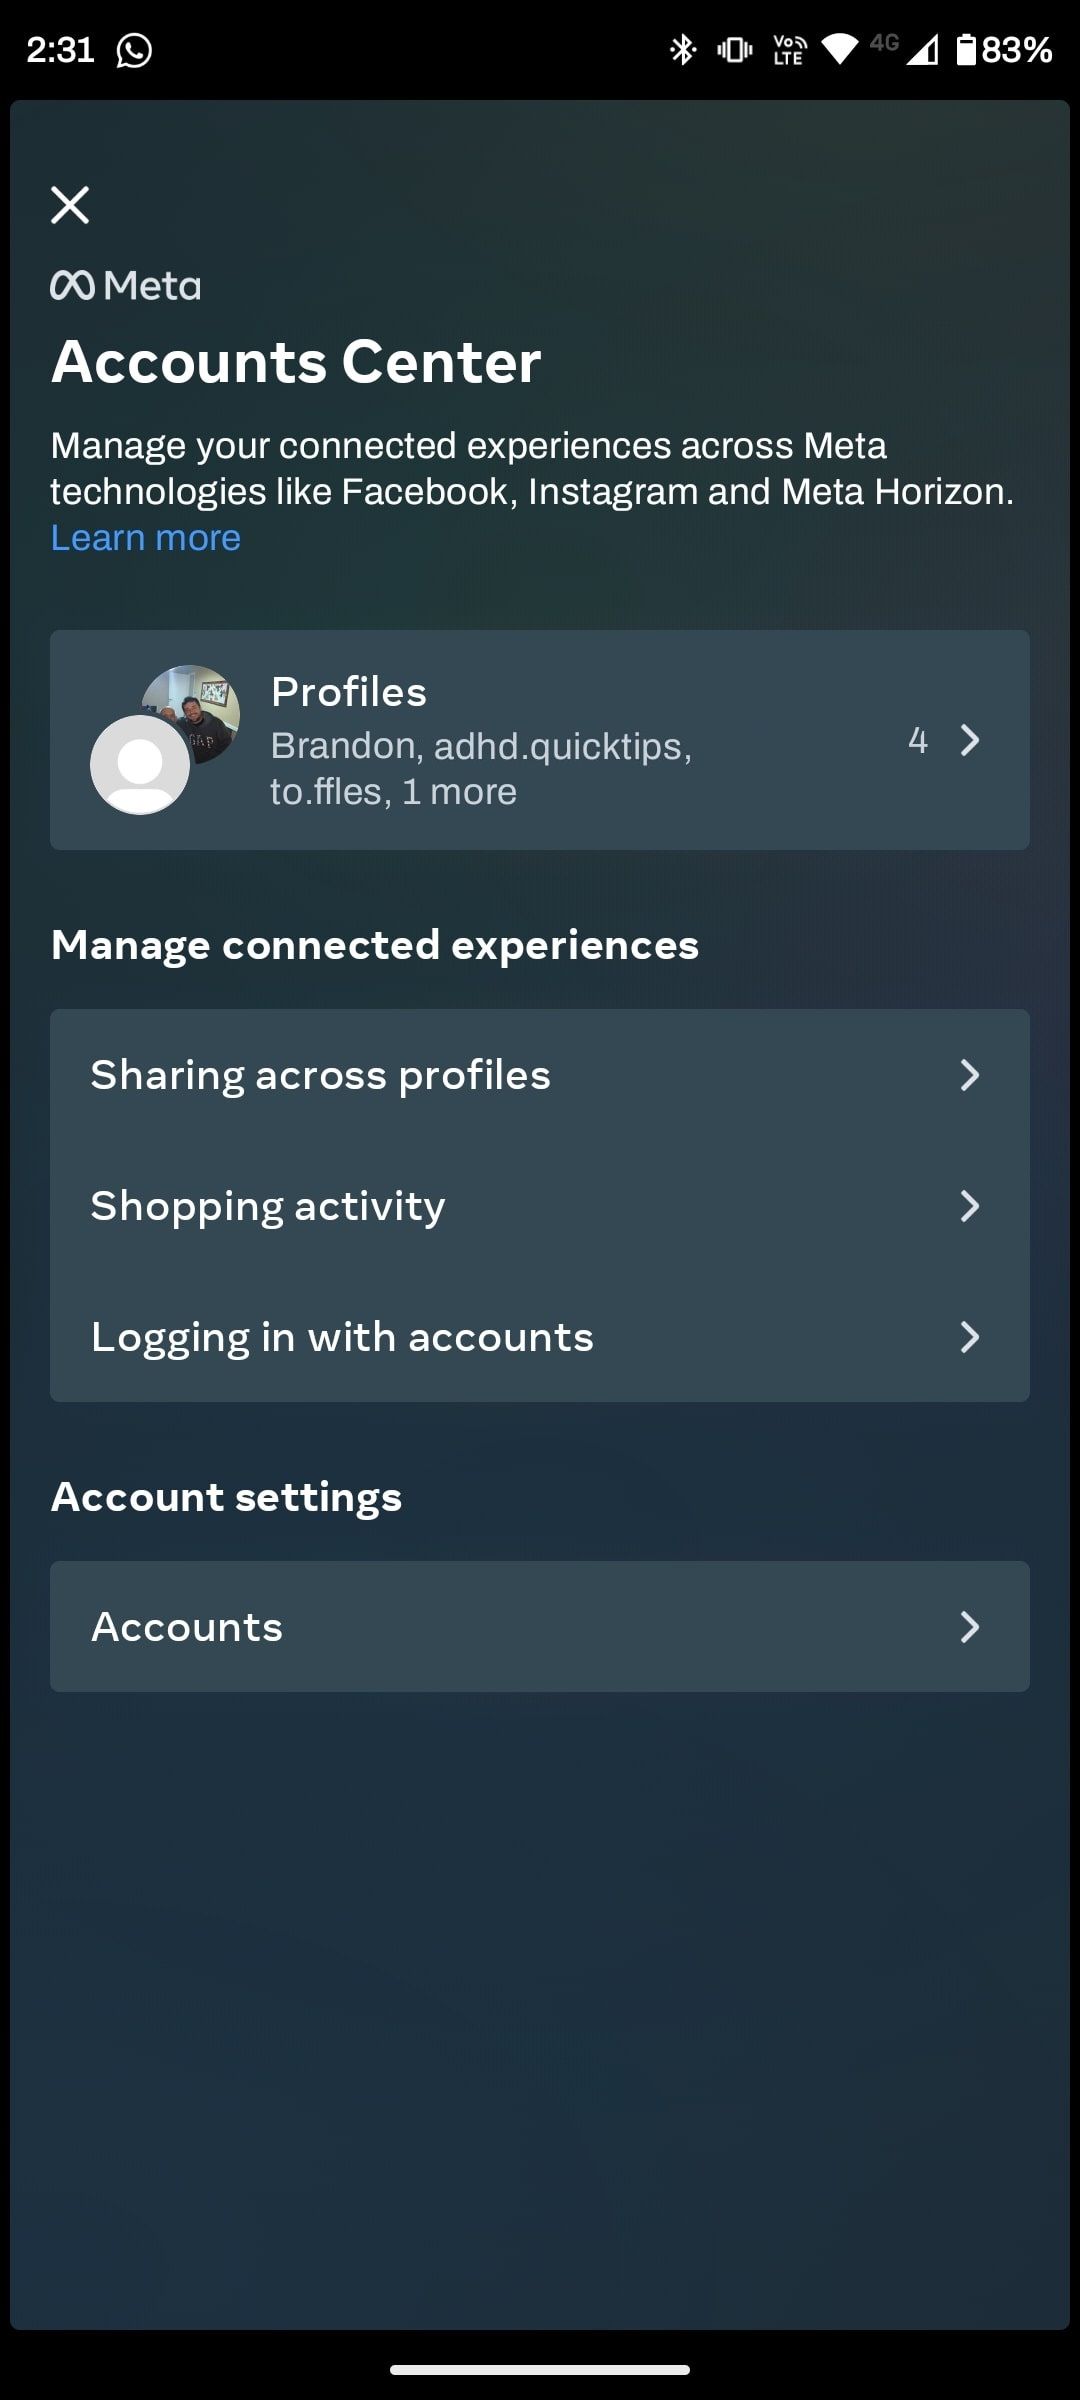 Meta Accounts Center hub with options